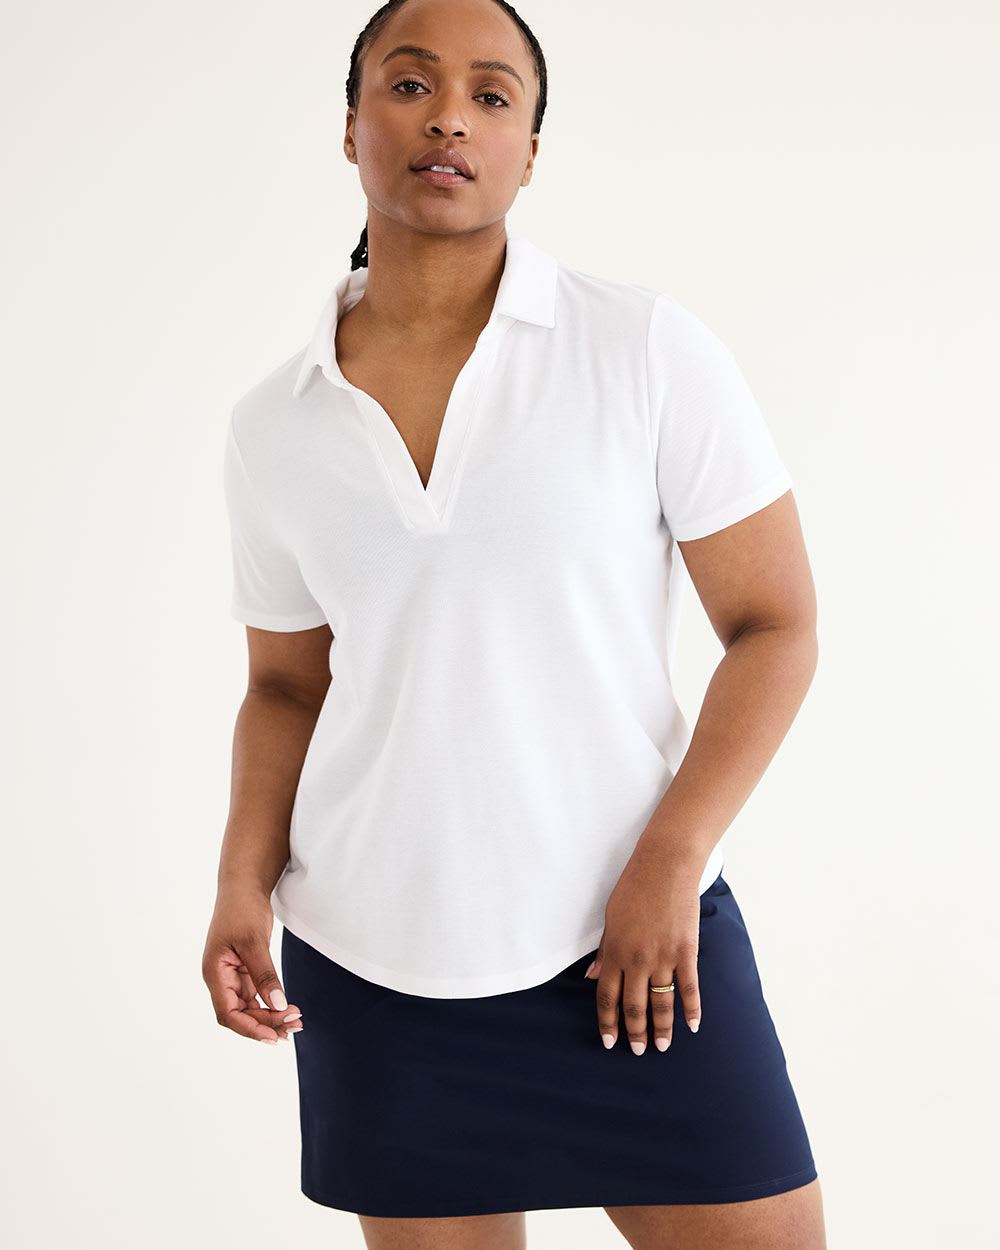 T-shirt polo à manches courtes en tricot piqué - Hyba